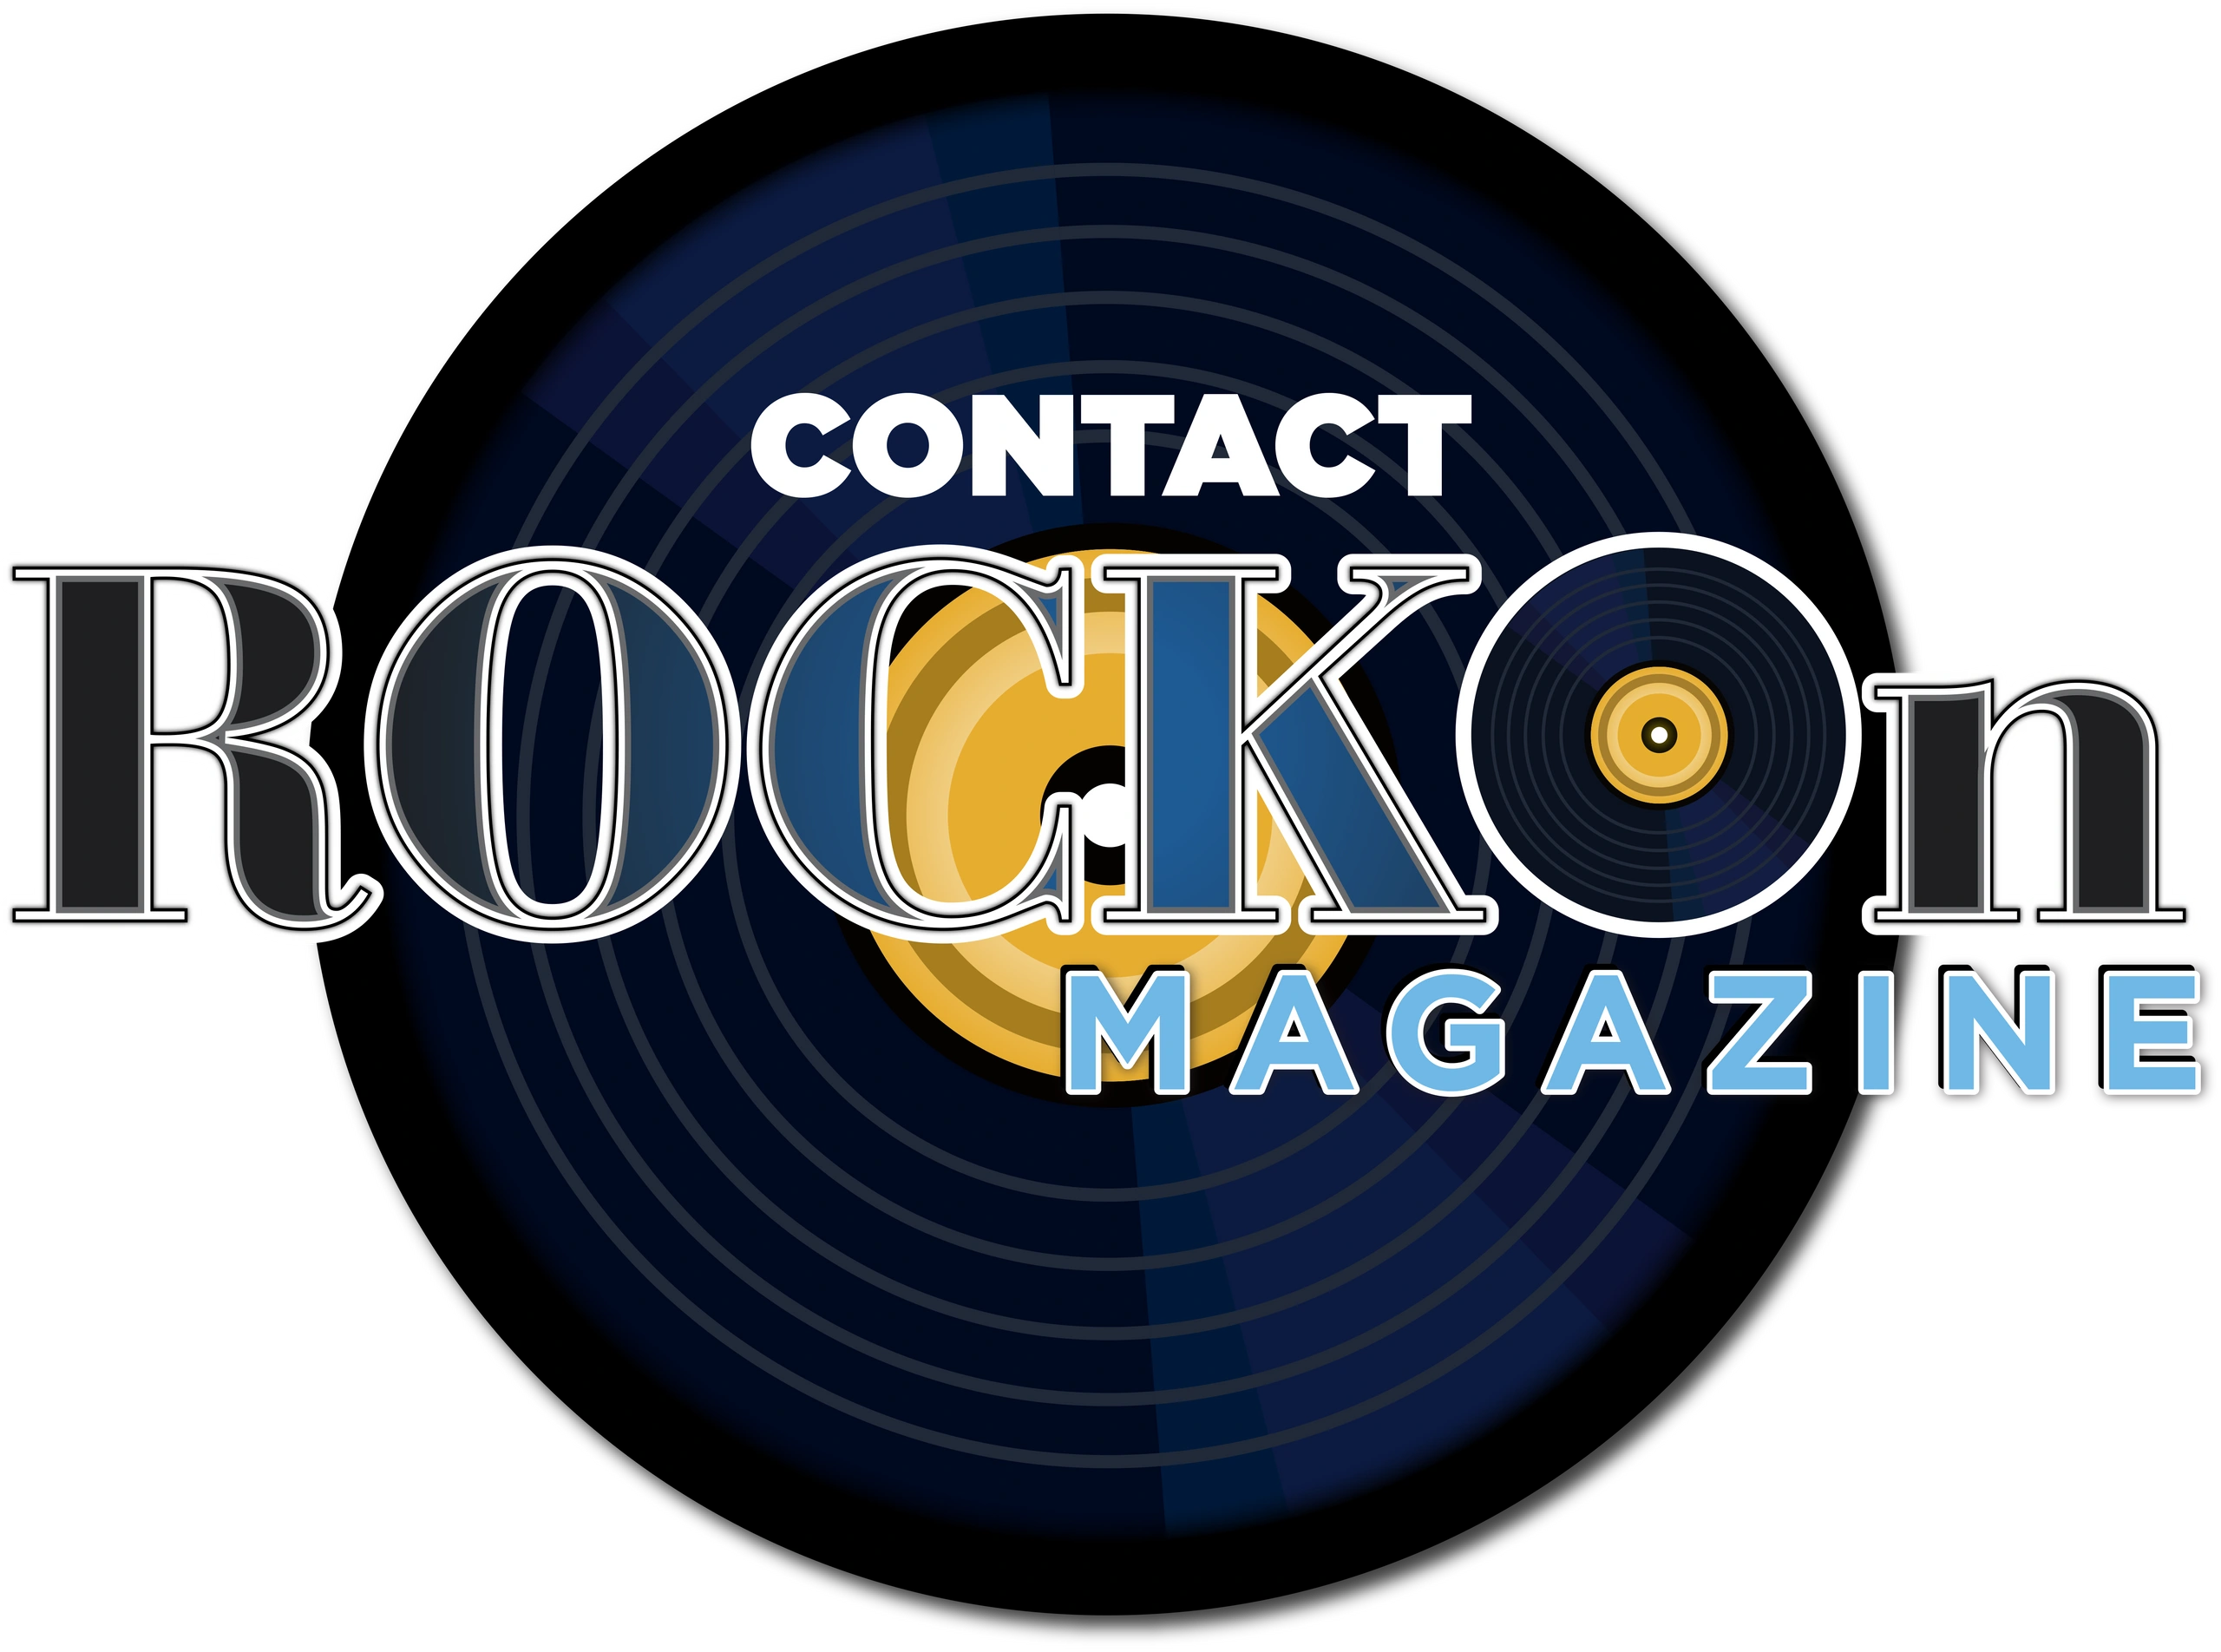 Rock On Magazine - Contact Us